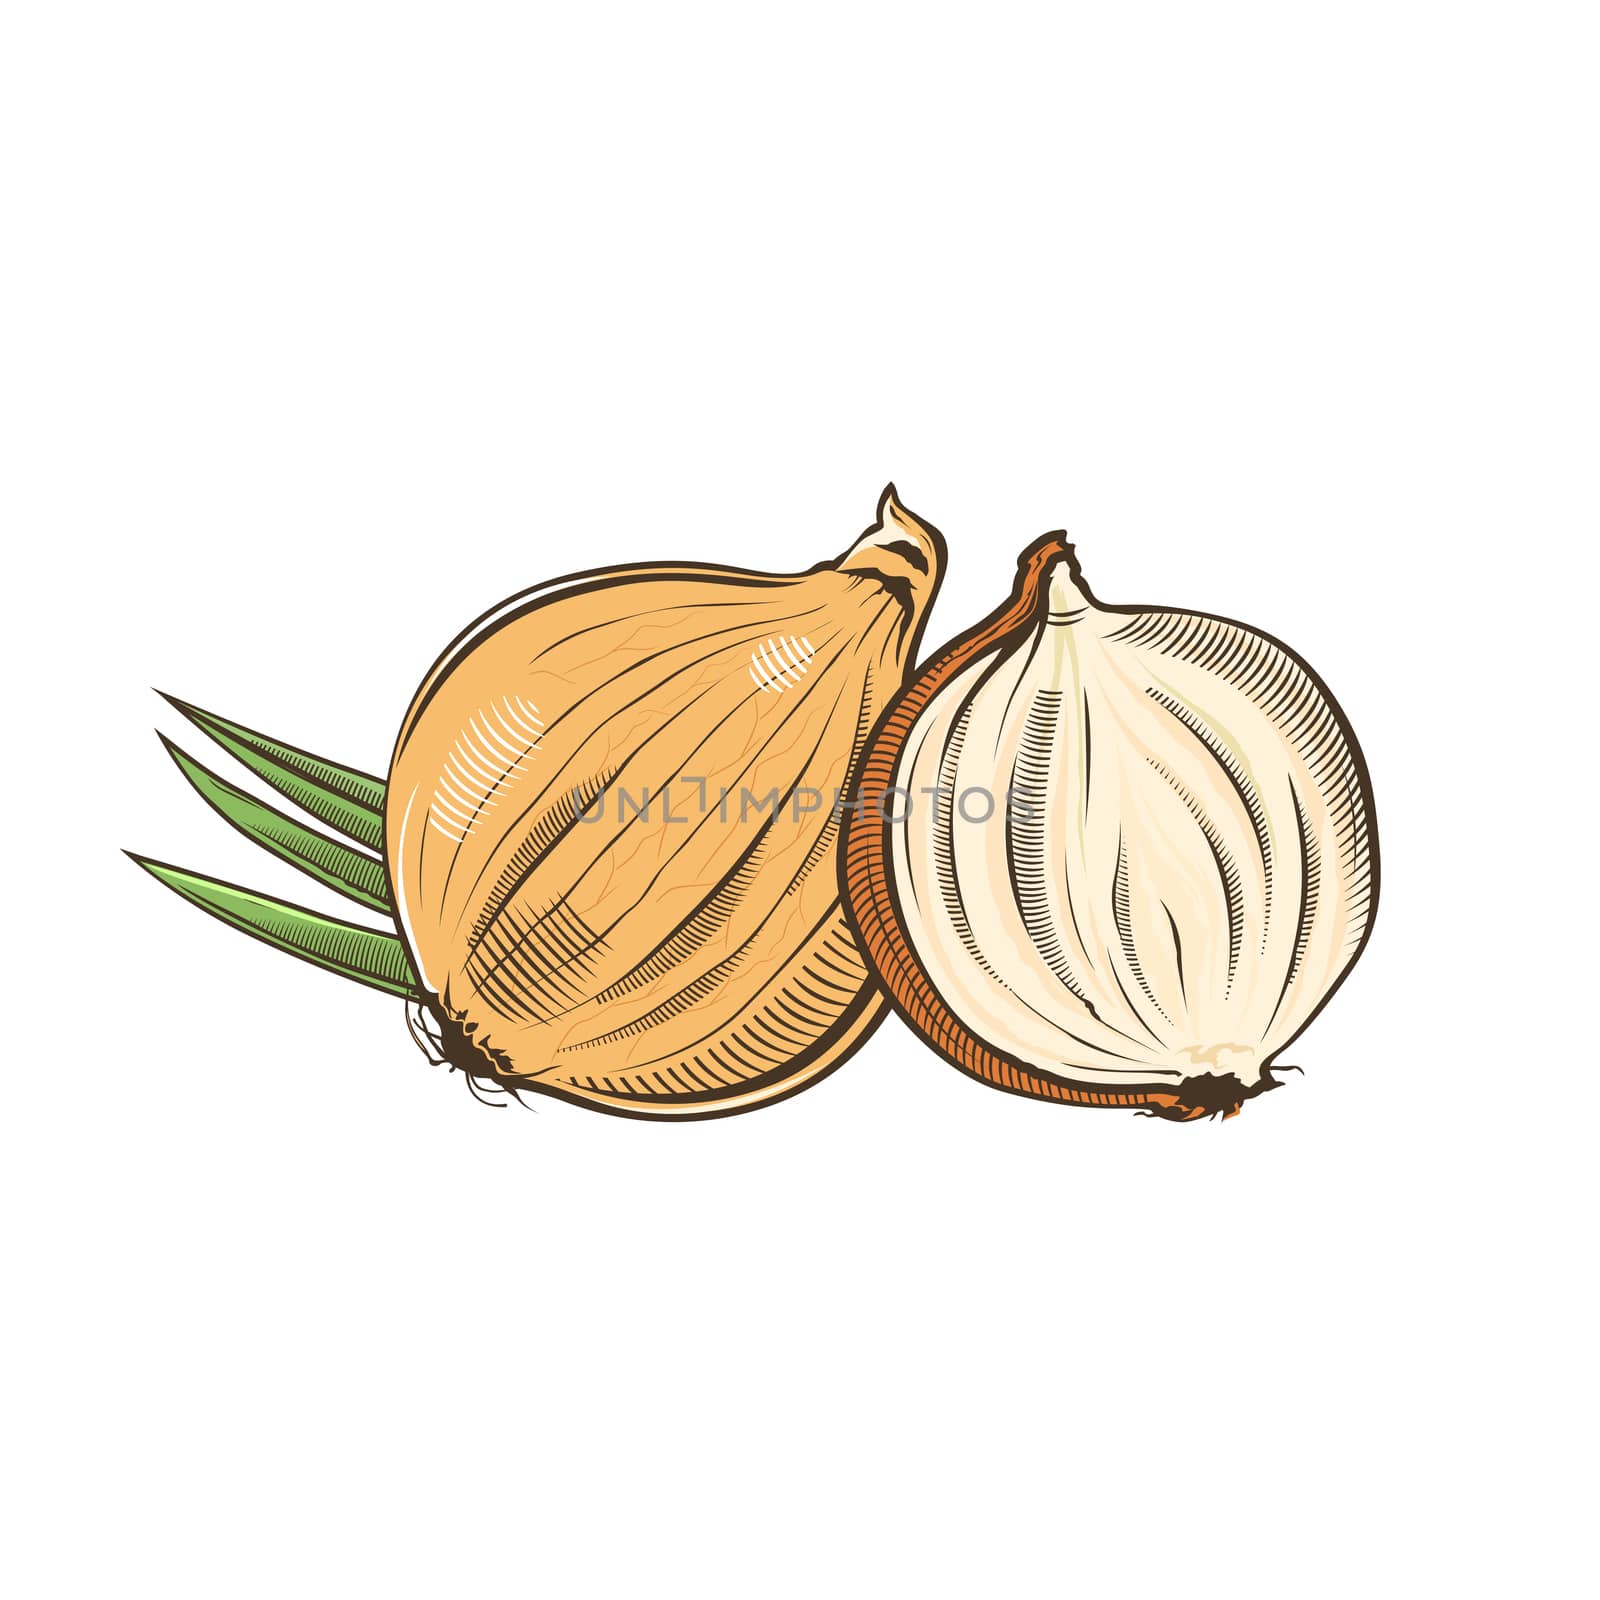 Onion in vintage style. Line art illustration.